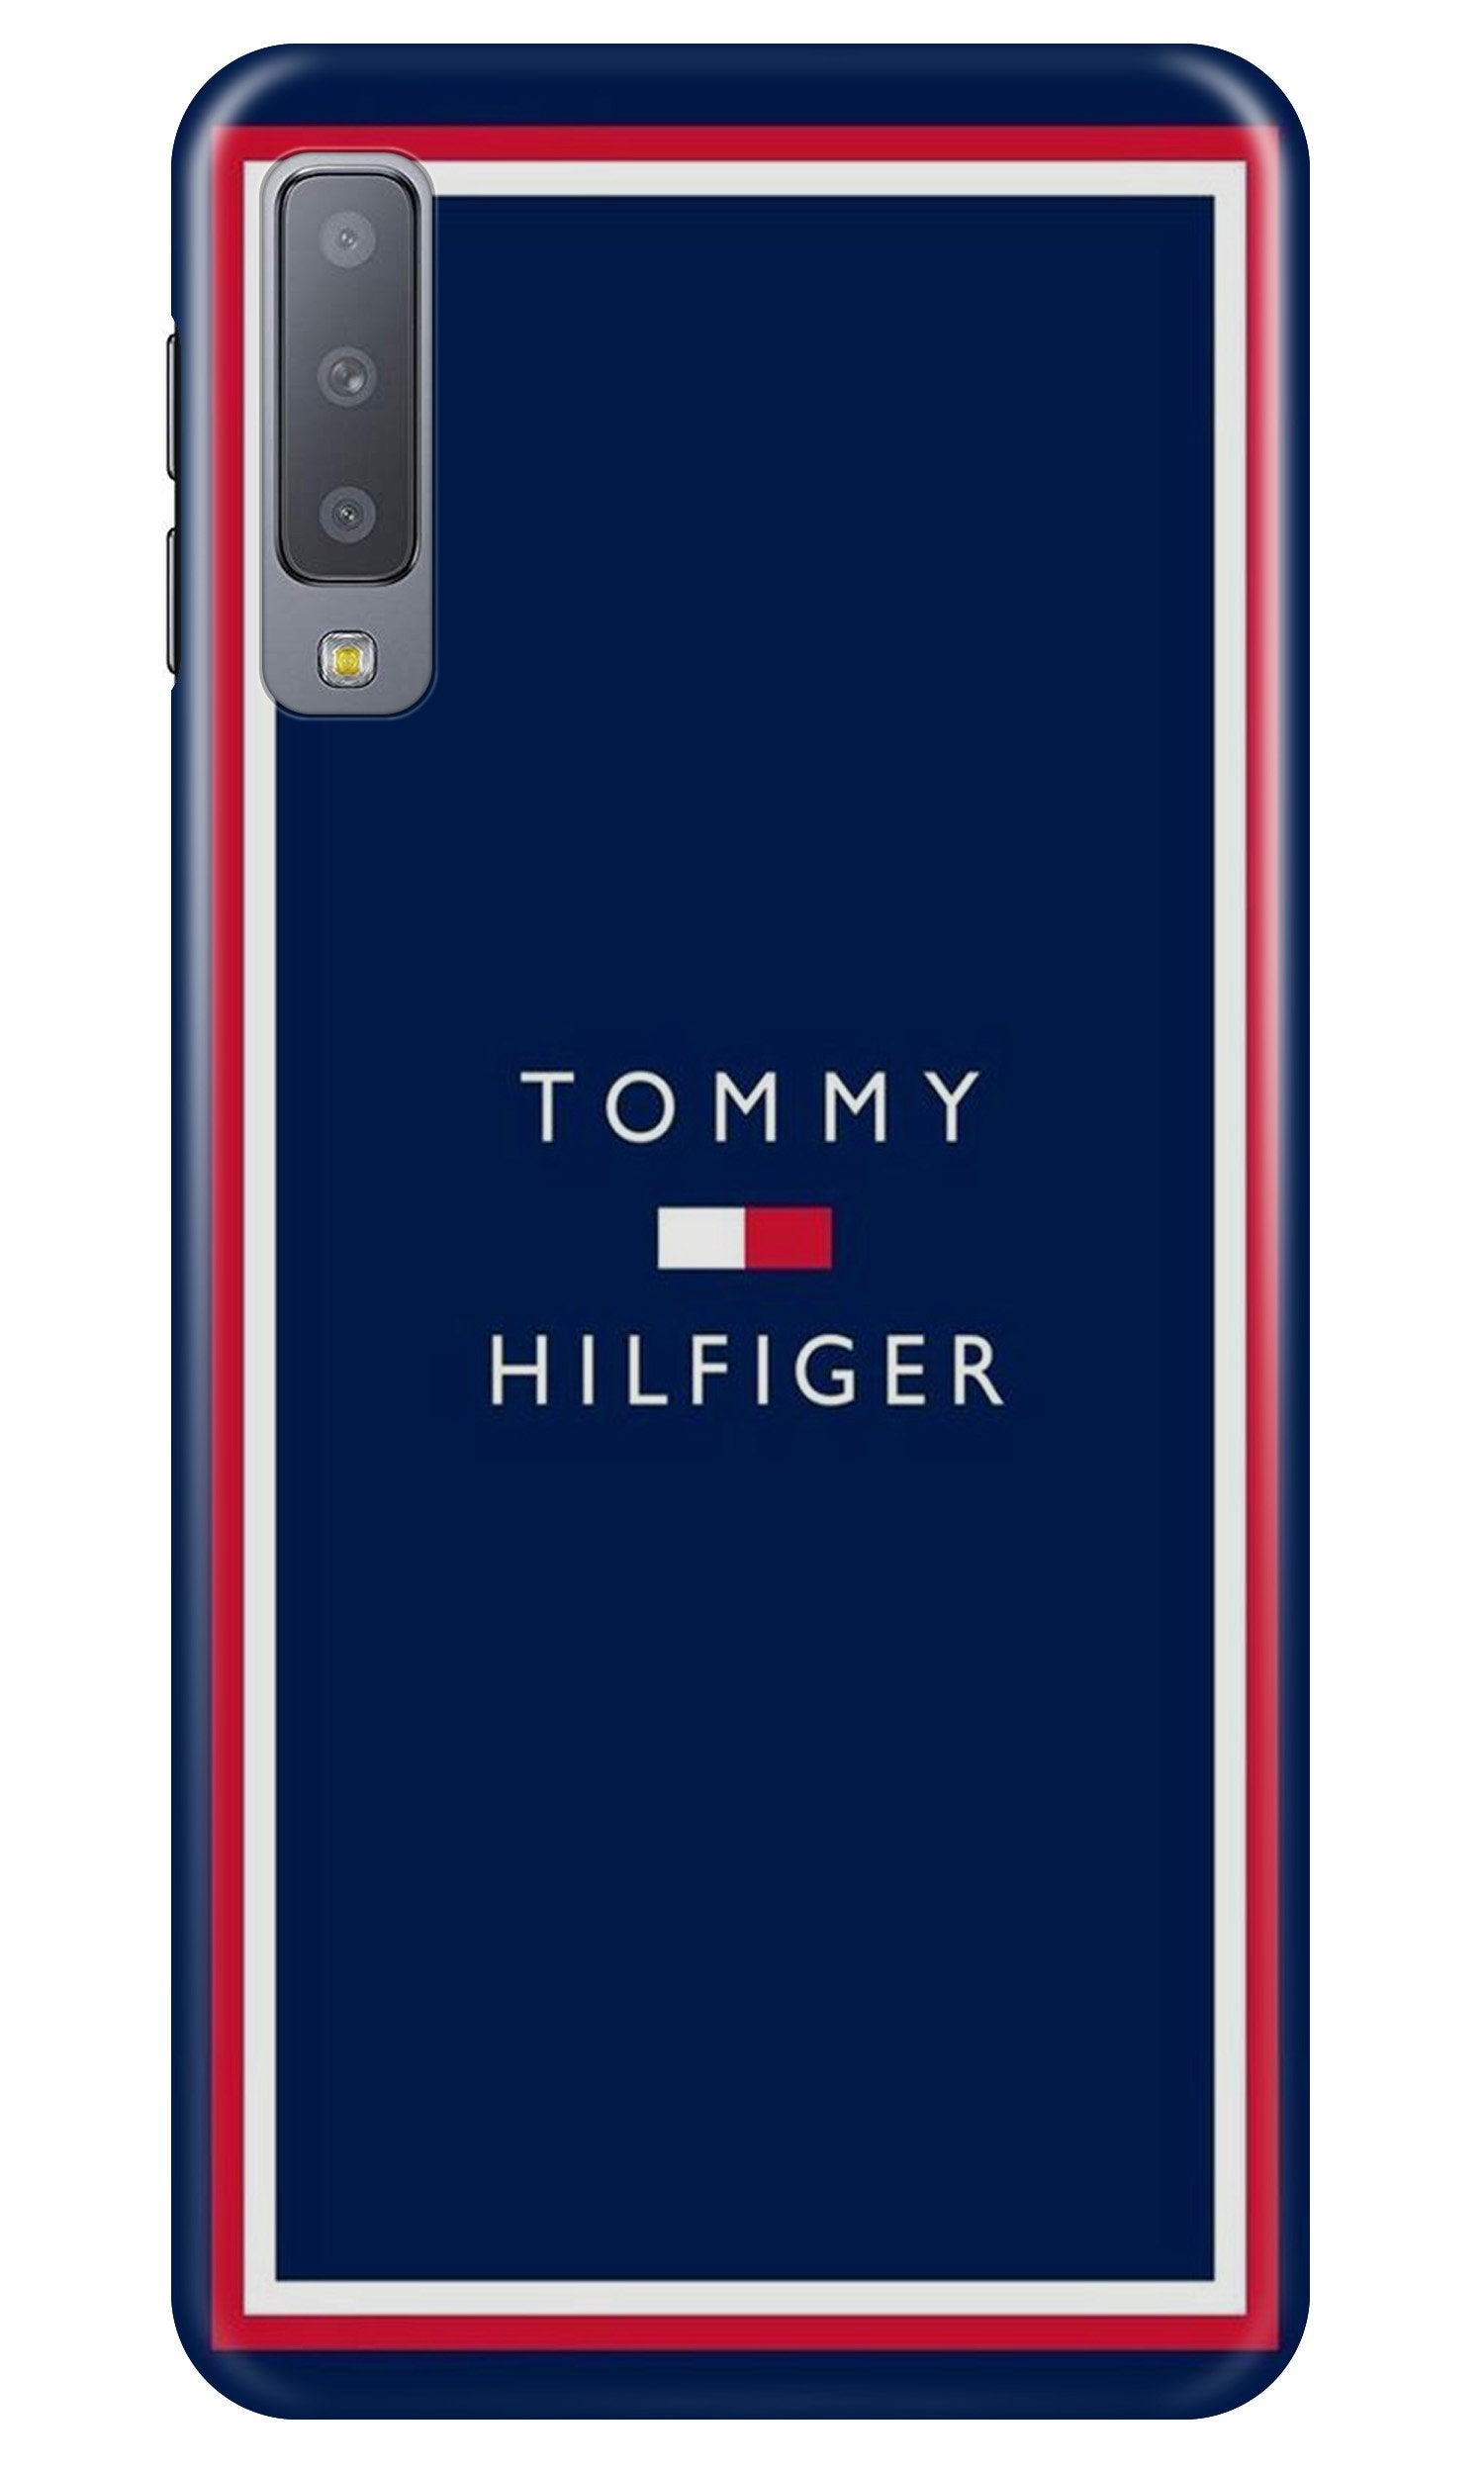 Tommy Hilfiger Case for Samung Galaxy A70s (Design No. 275)